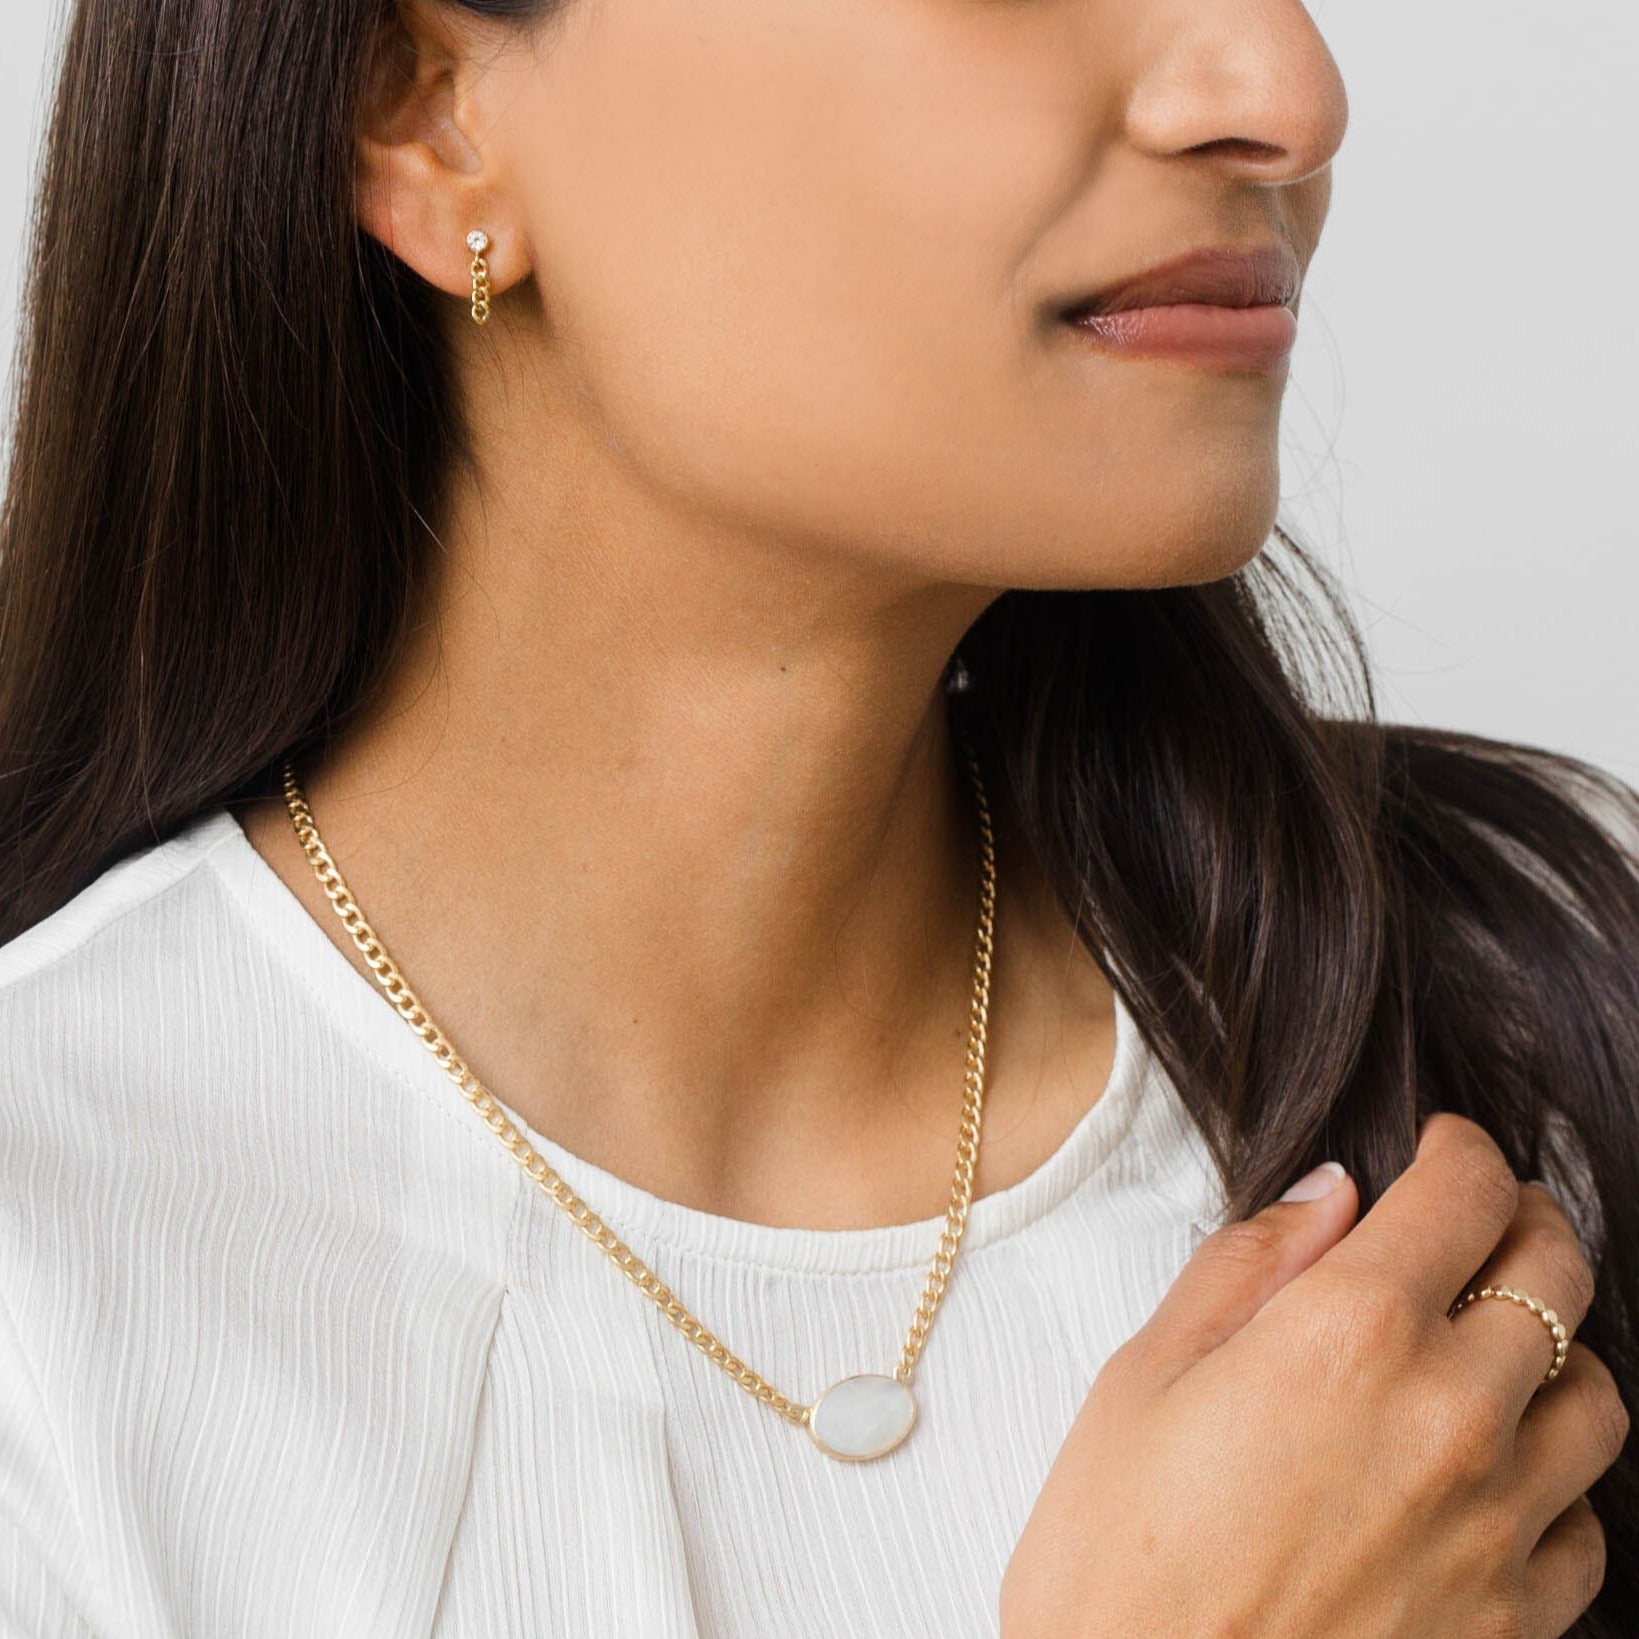 Everyday chain drop earrings with a genuine white topaz gemstone. Elegant, elevated chain earrings.